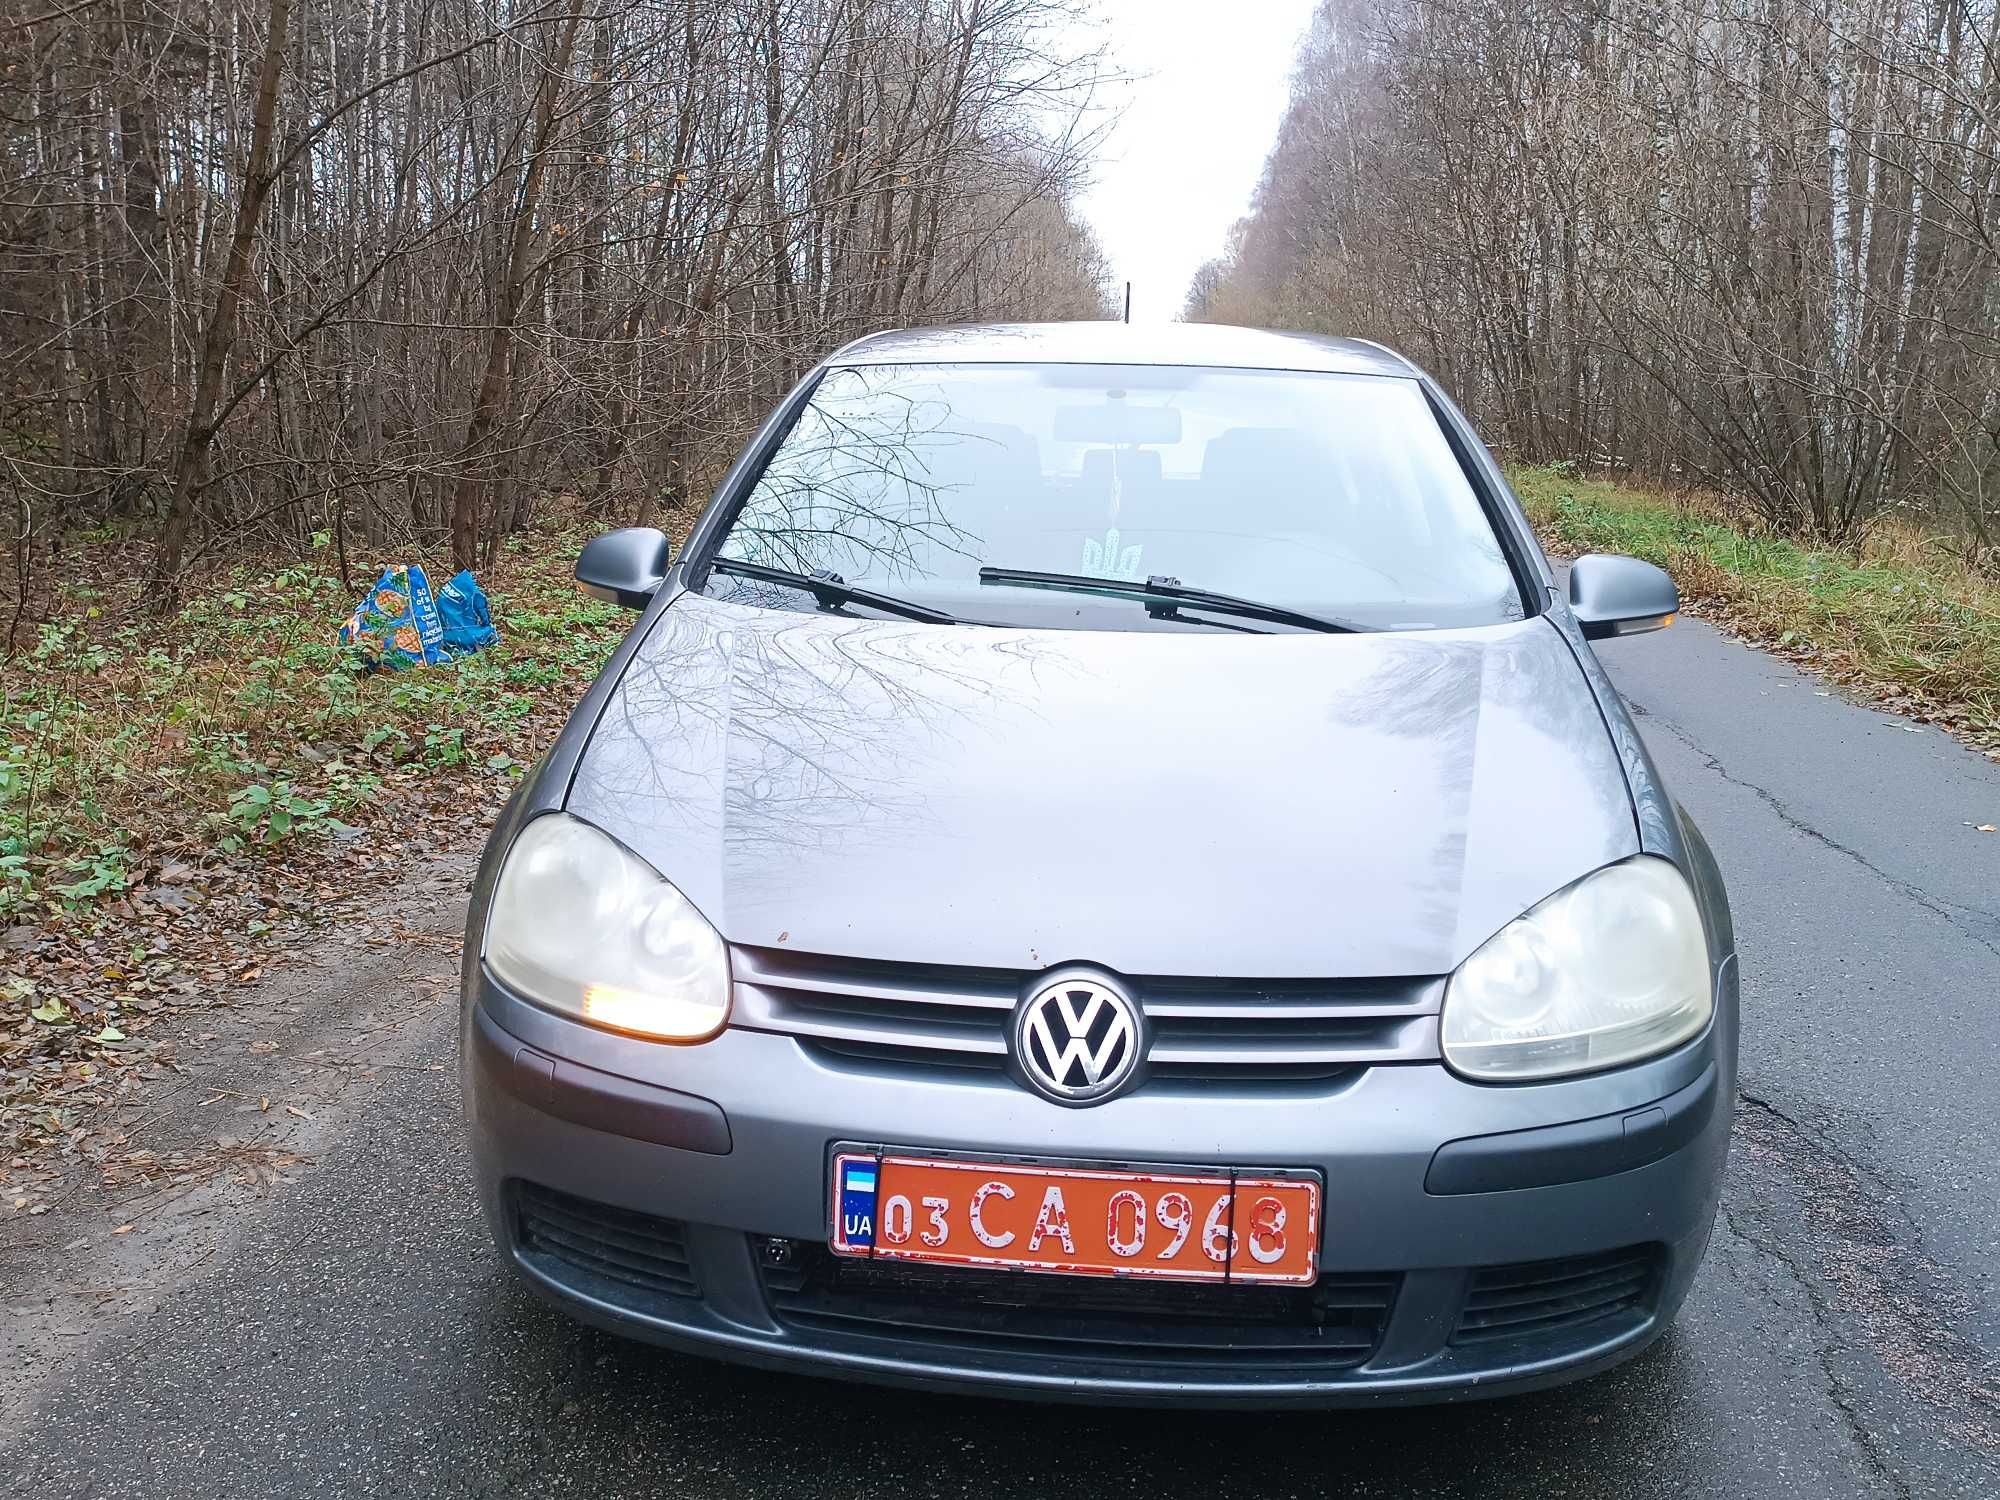 Продам Volkswagen golf 5  2005р.1,6 бензин.У хорошому стані